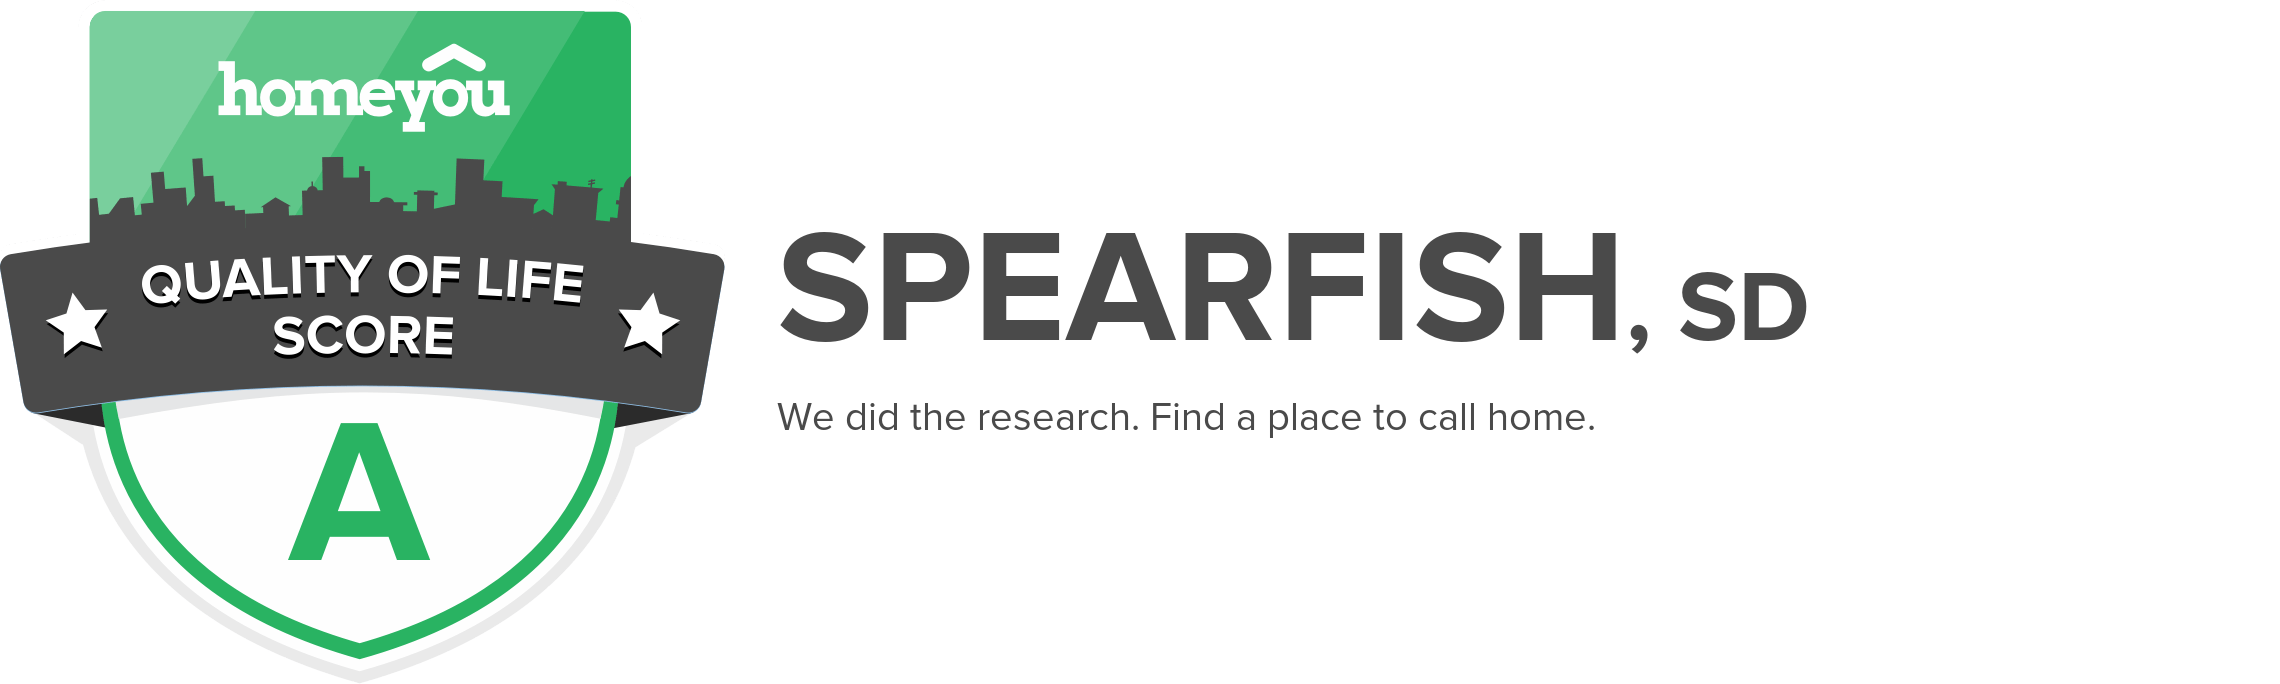 Spearfish, SD